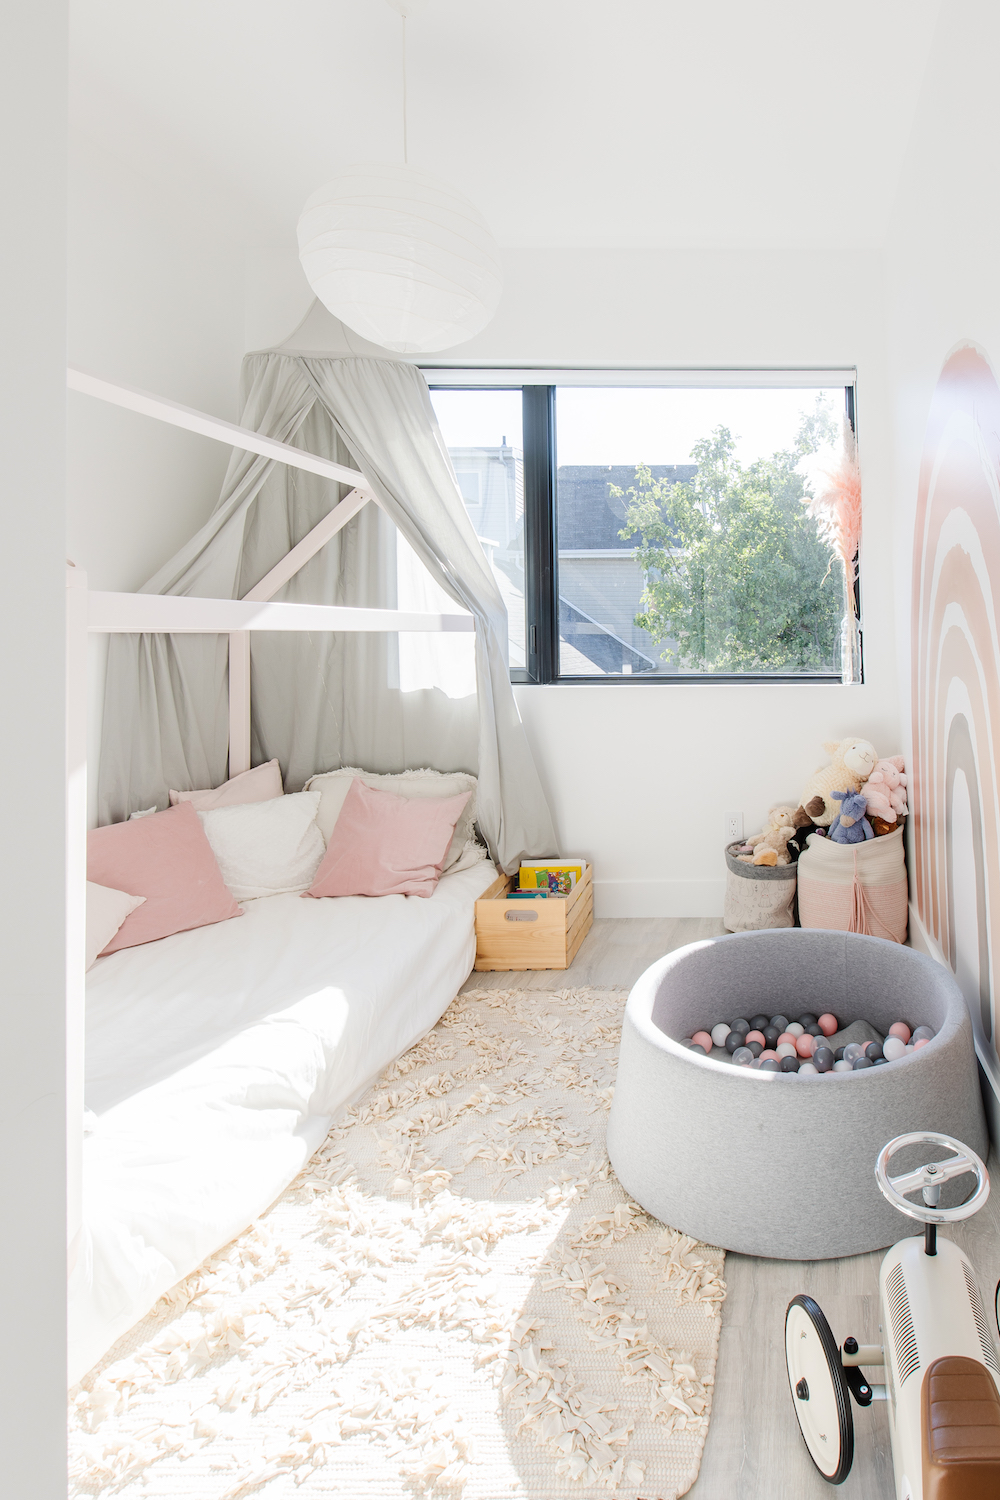 Adorable kid's bedroom with modern furnishings